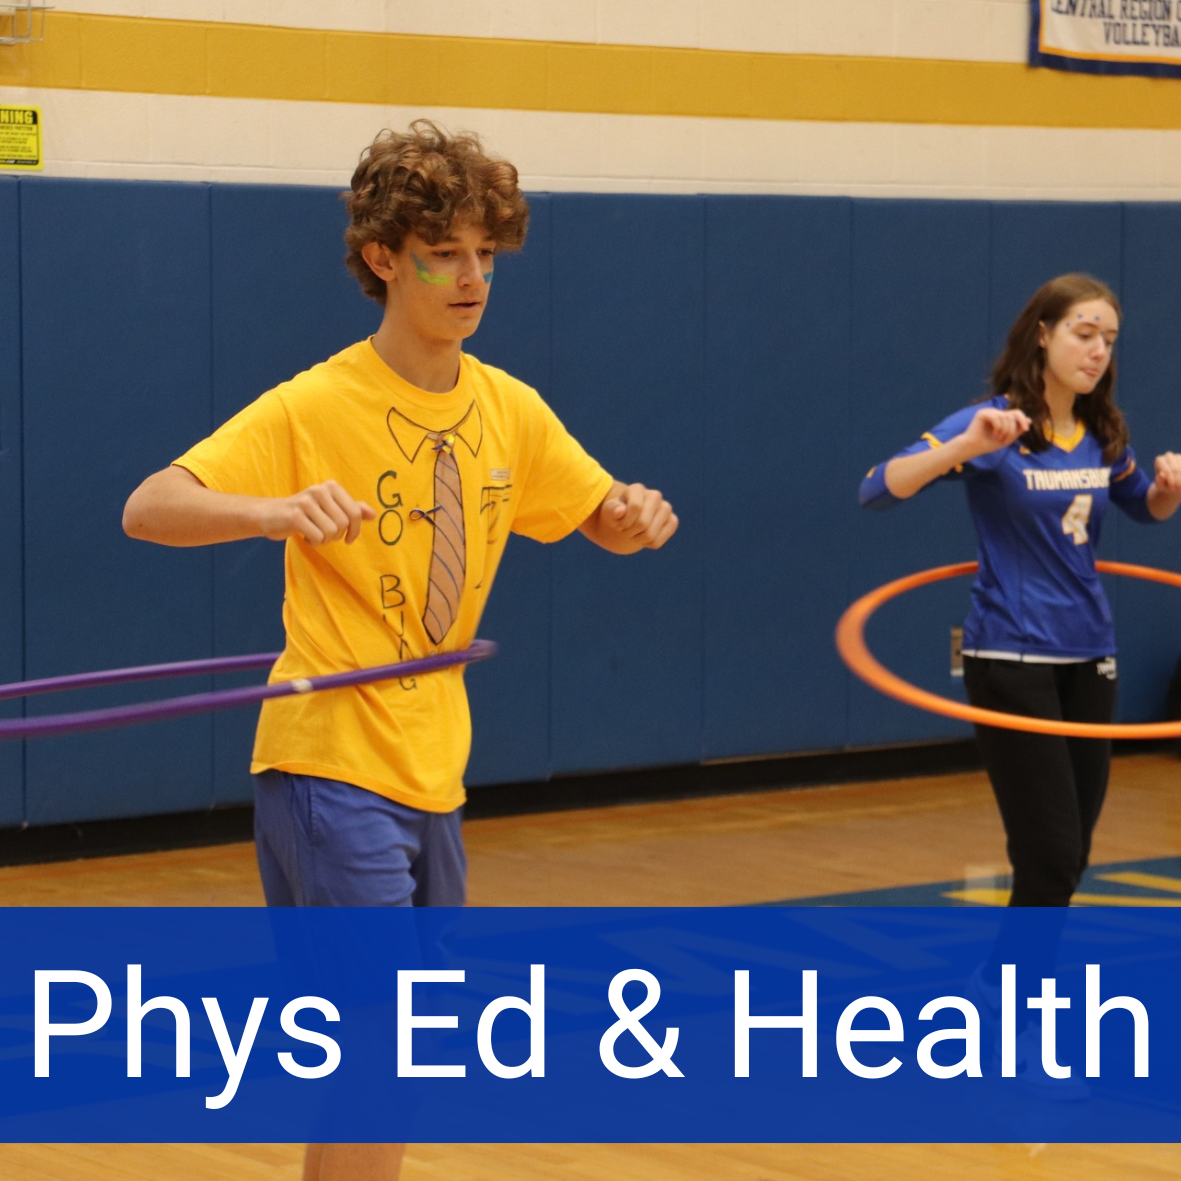 Phys Ed & Health